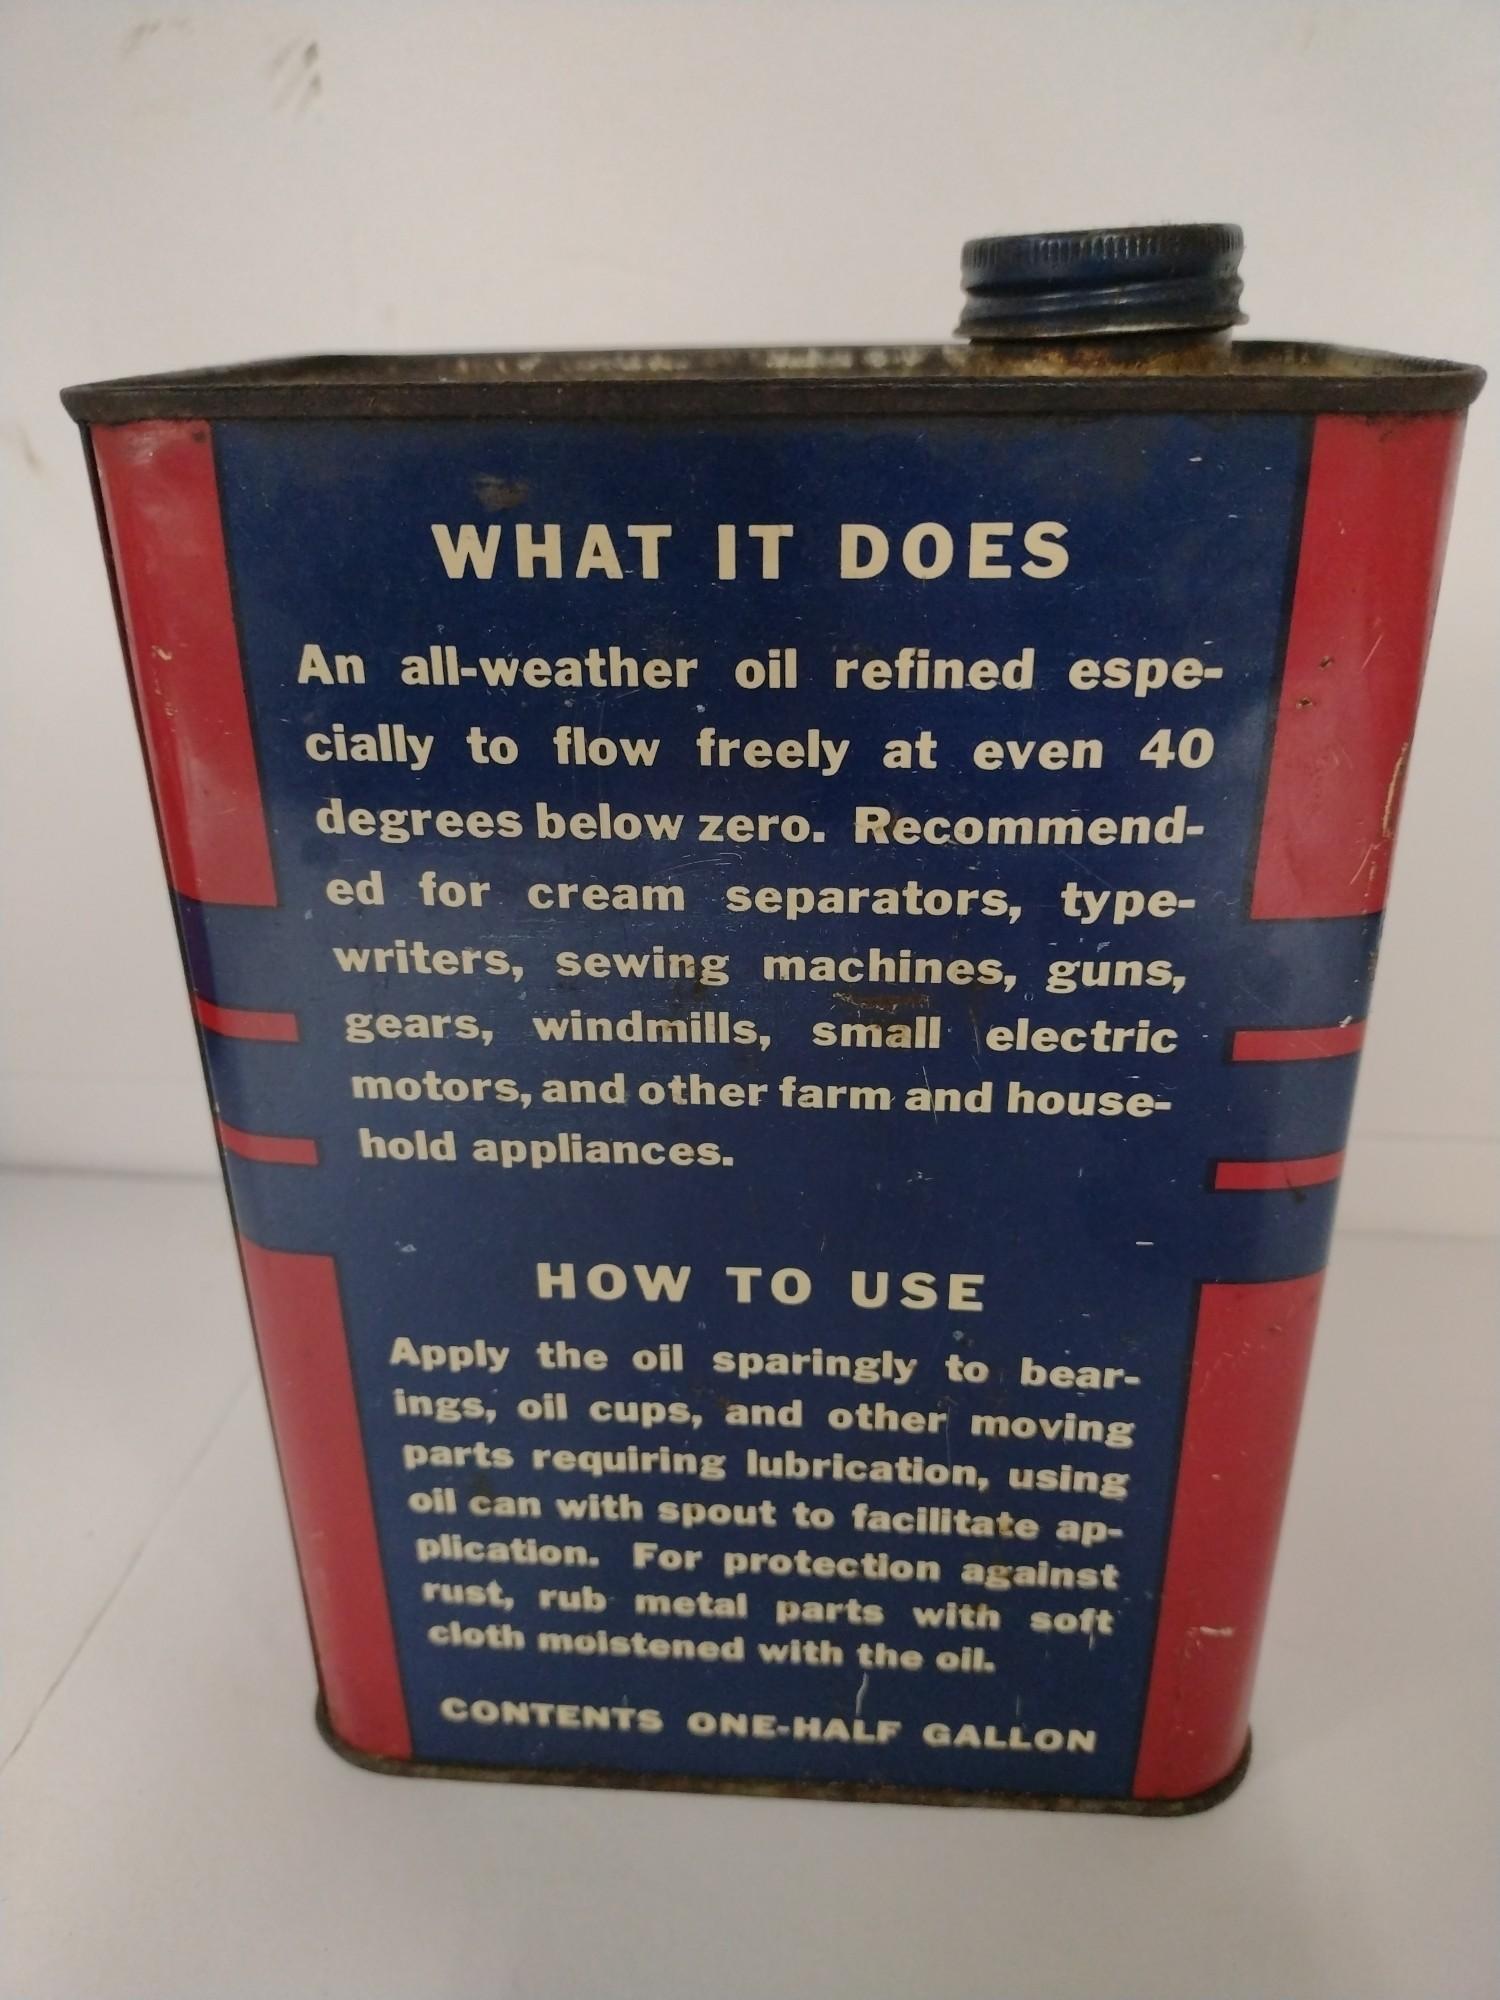 Vintage Cream Separator Oil Cans